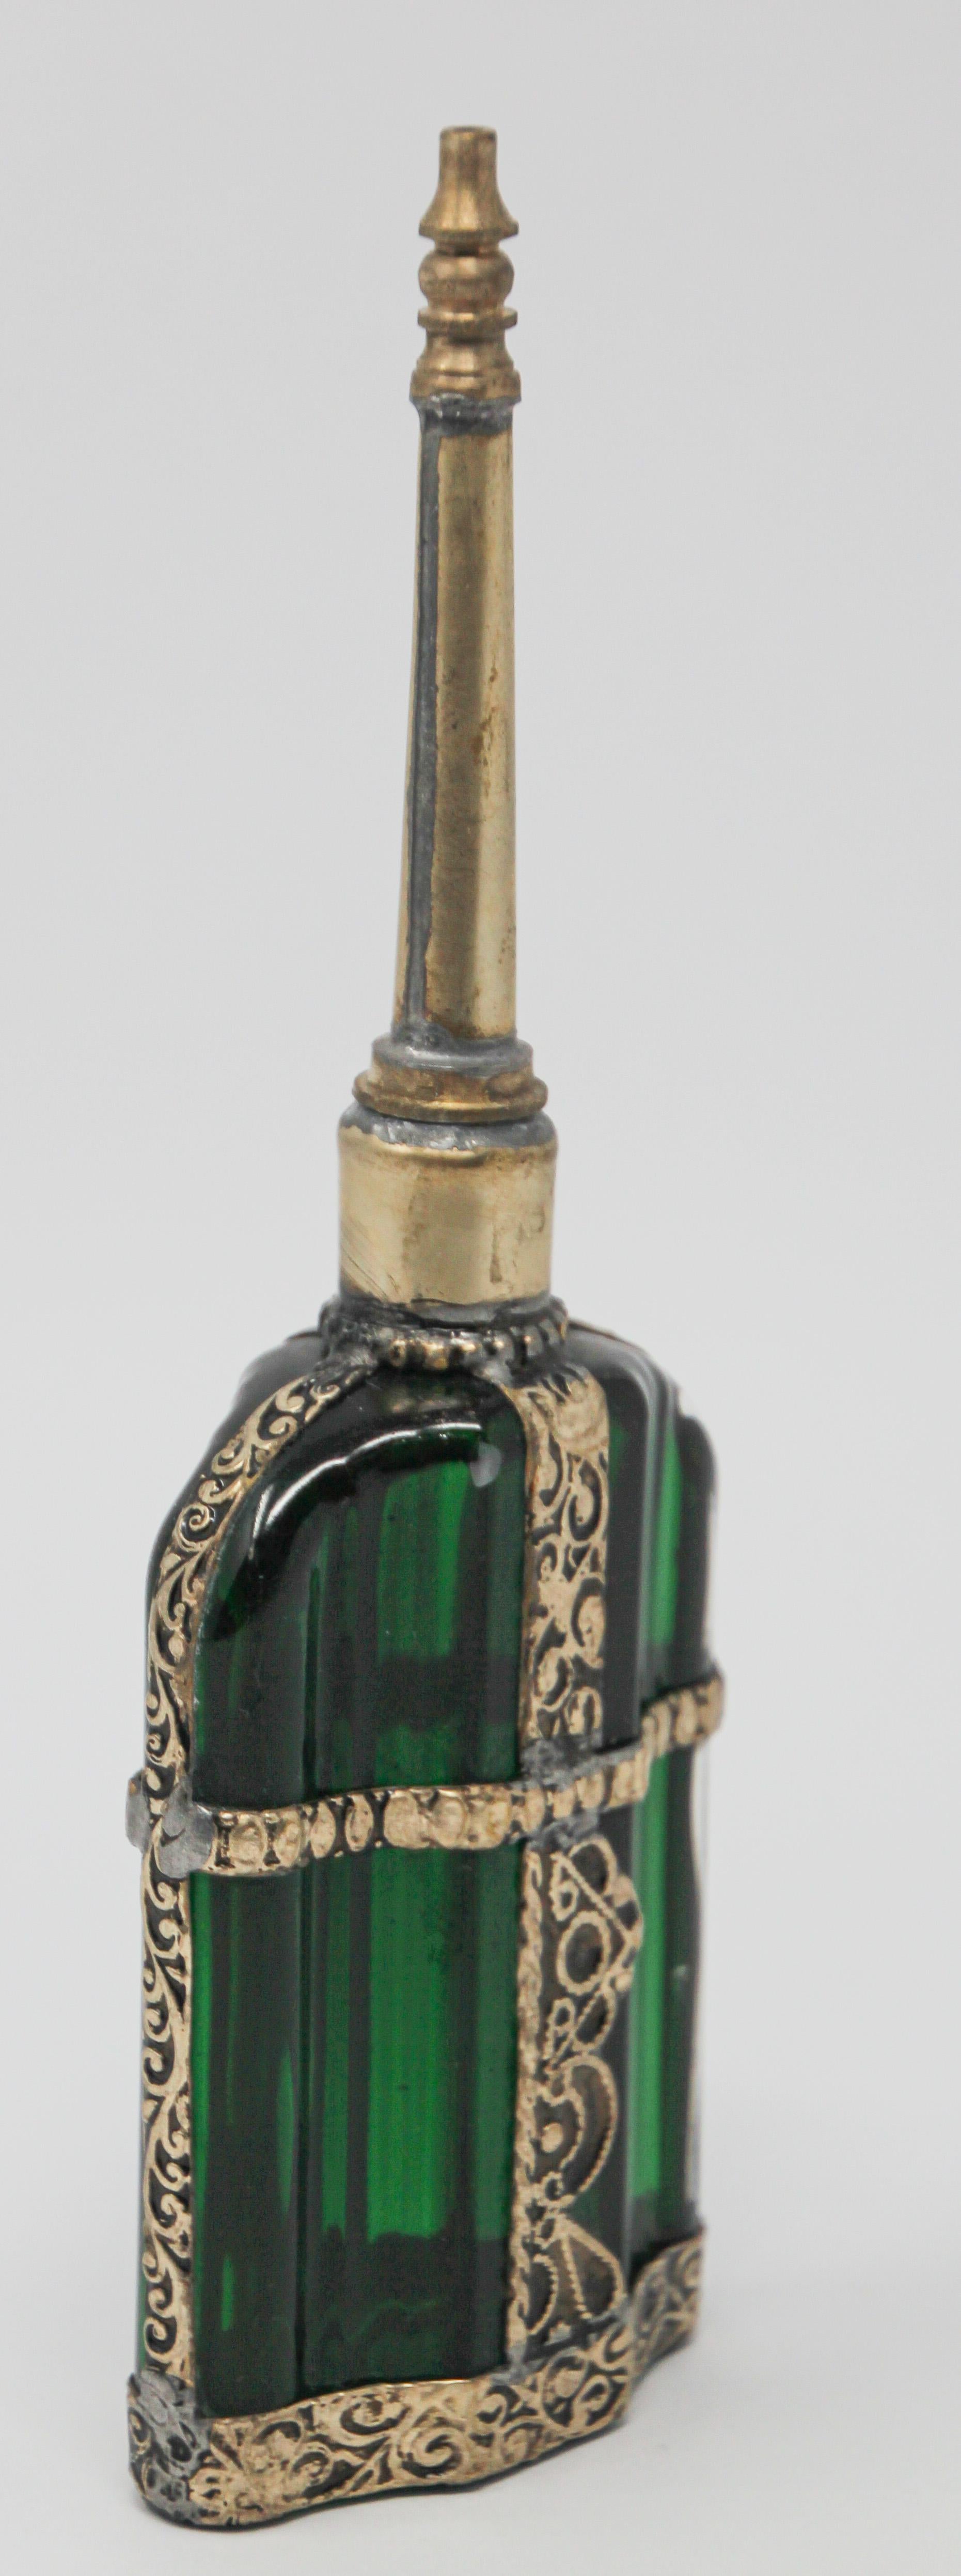 Mauresque Flacon de flacon de parfum mauresque en verre vert émeraude avec superposition de métal embossé en vente